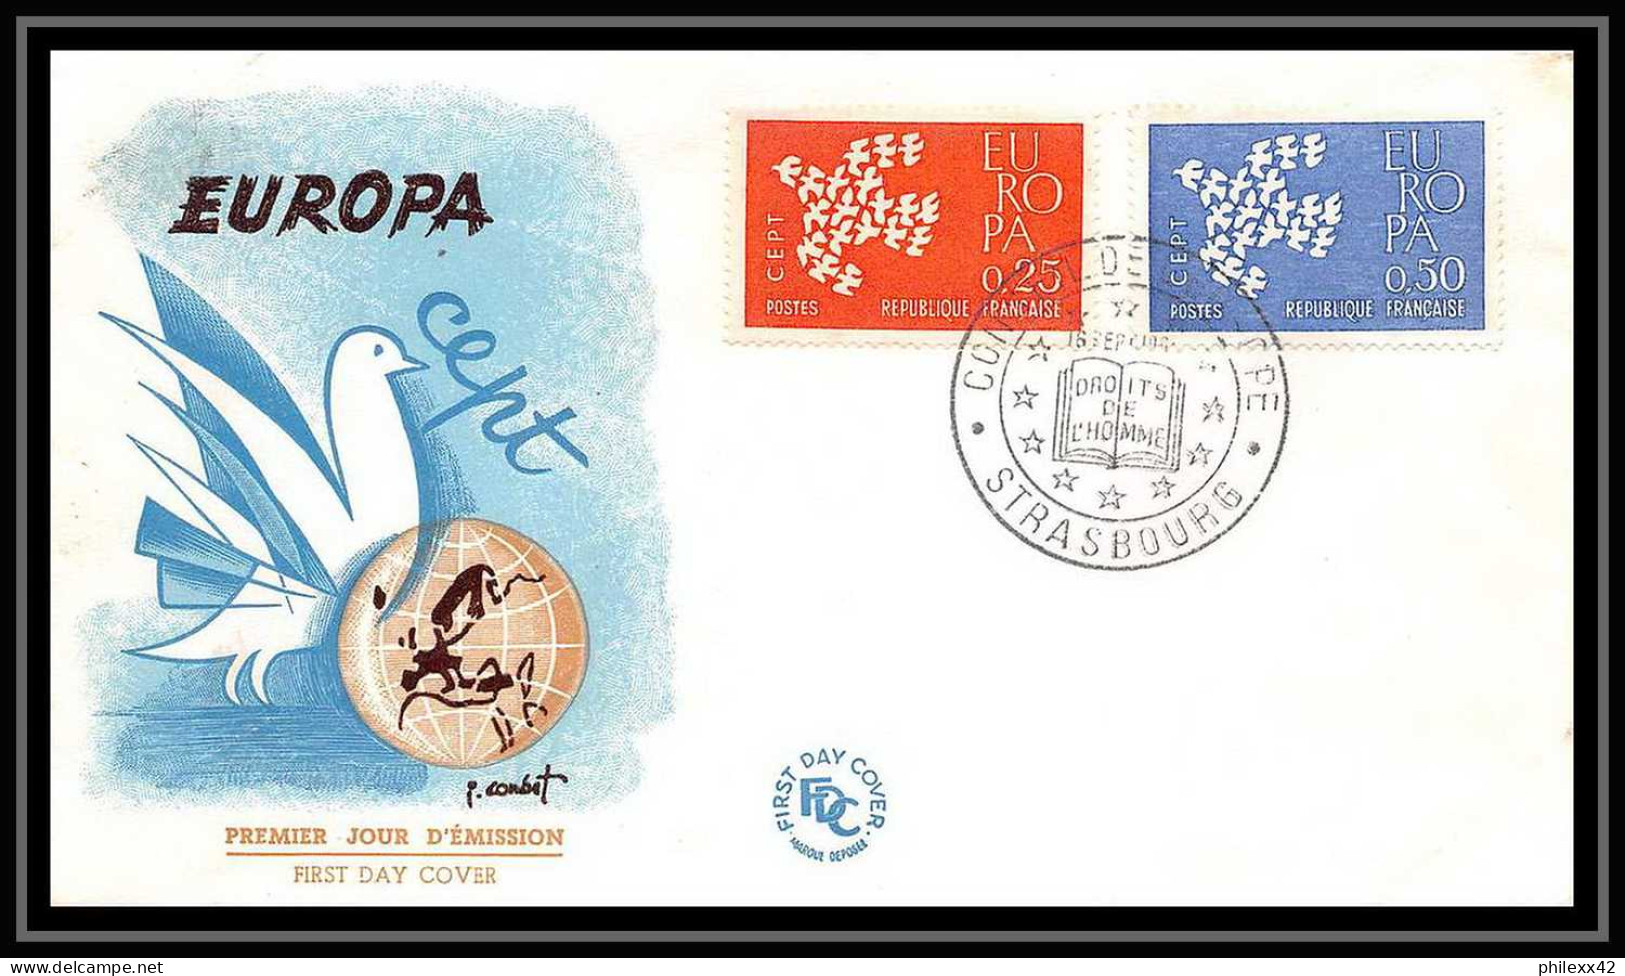 16886 - France Lettre Premier Jour (fdc Cover) N° 1309 /1310 17 Lettres Différentes Collection Rare Europa 1961 - 1961